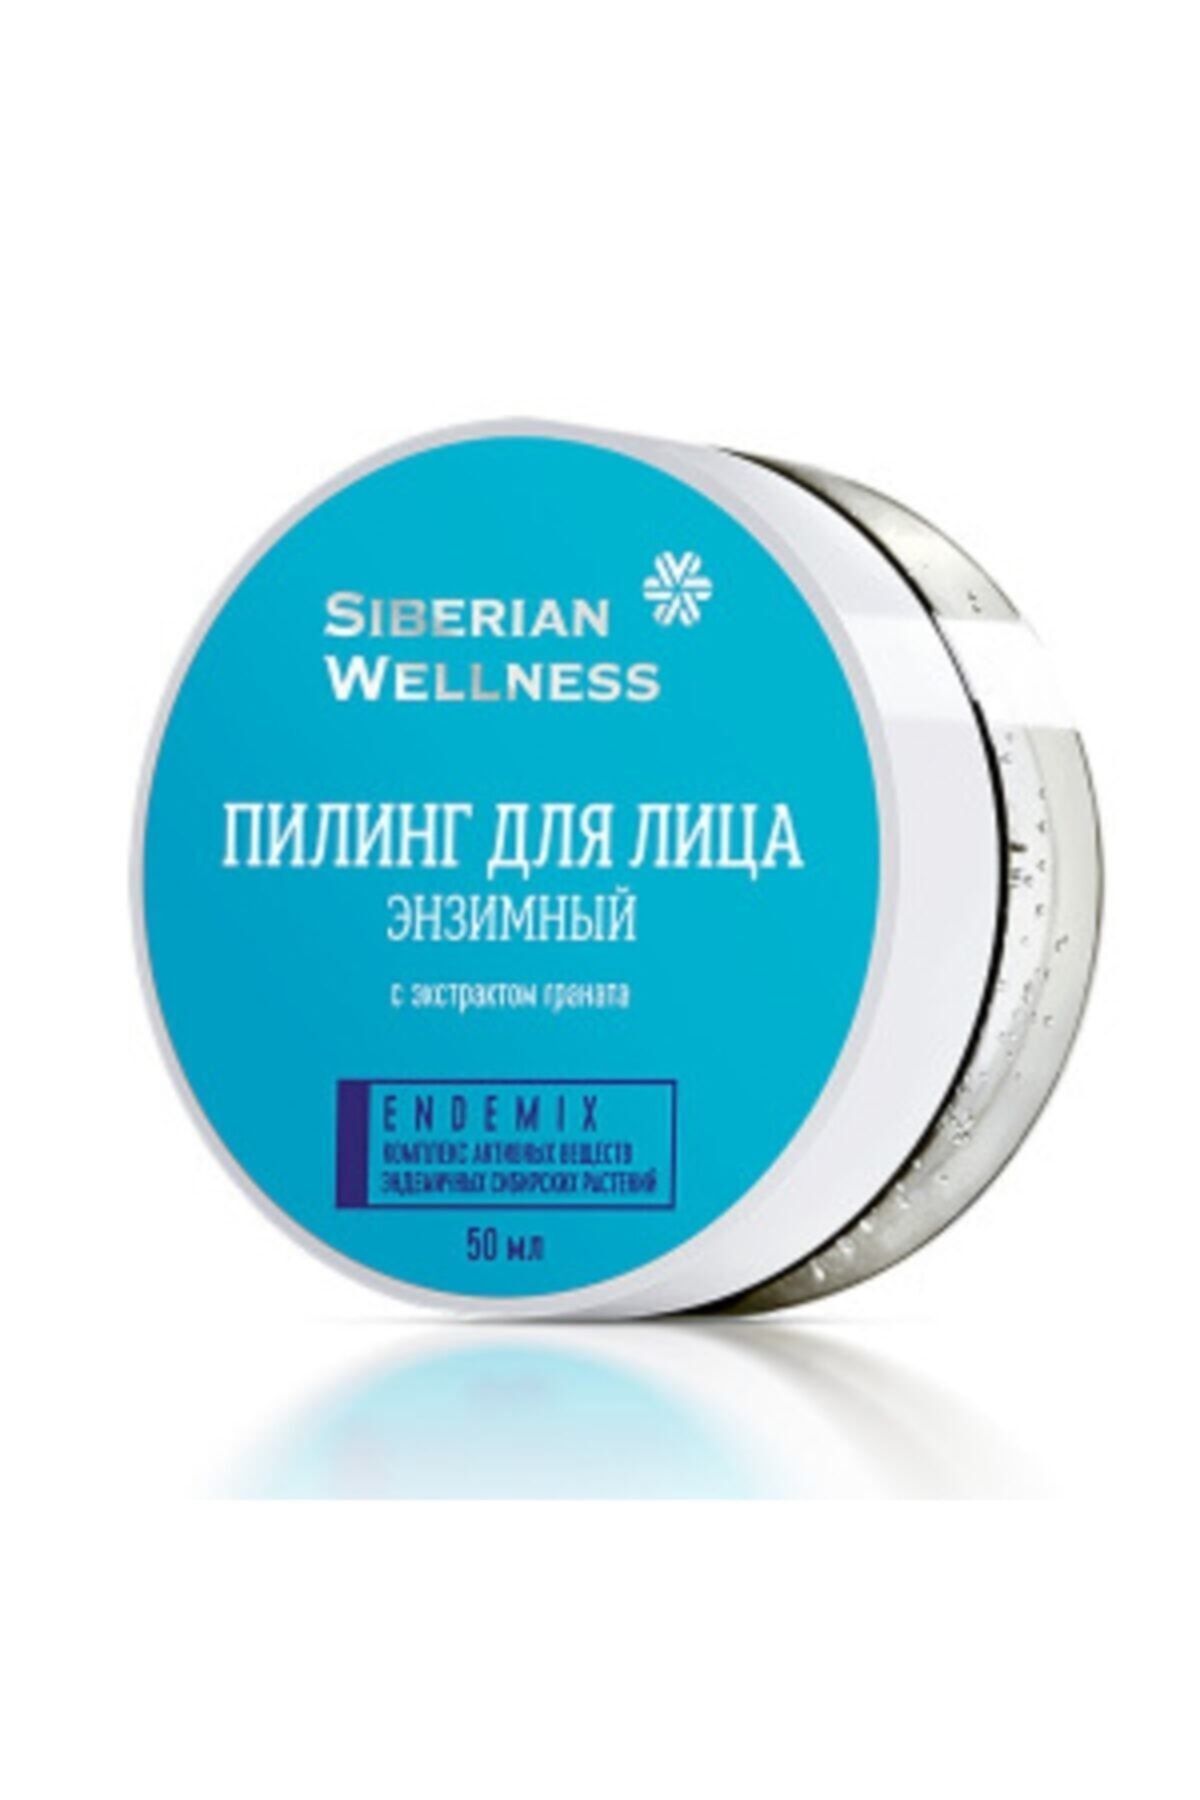 Siberian Wellness Enzyme Face Peeling